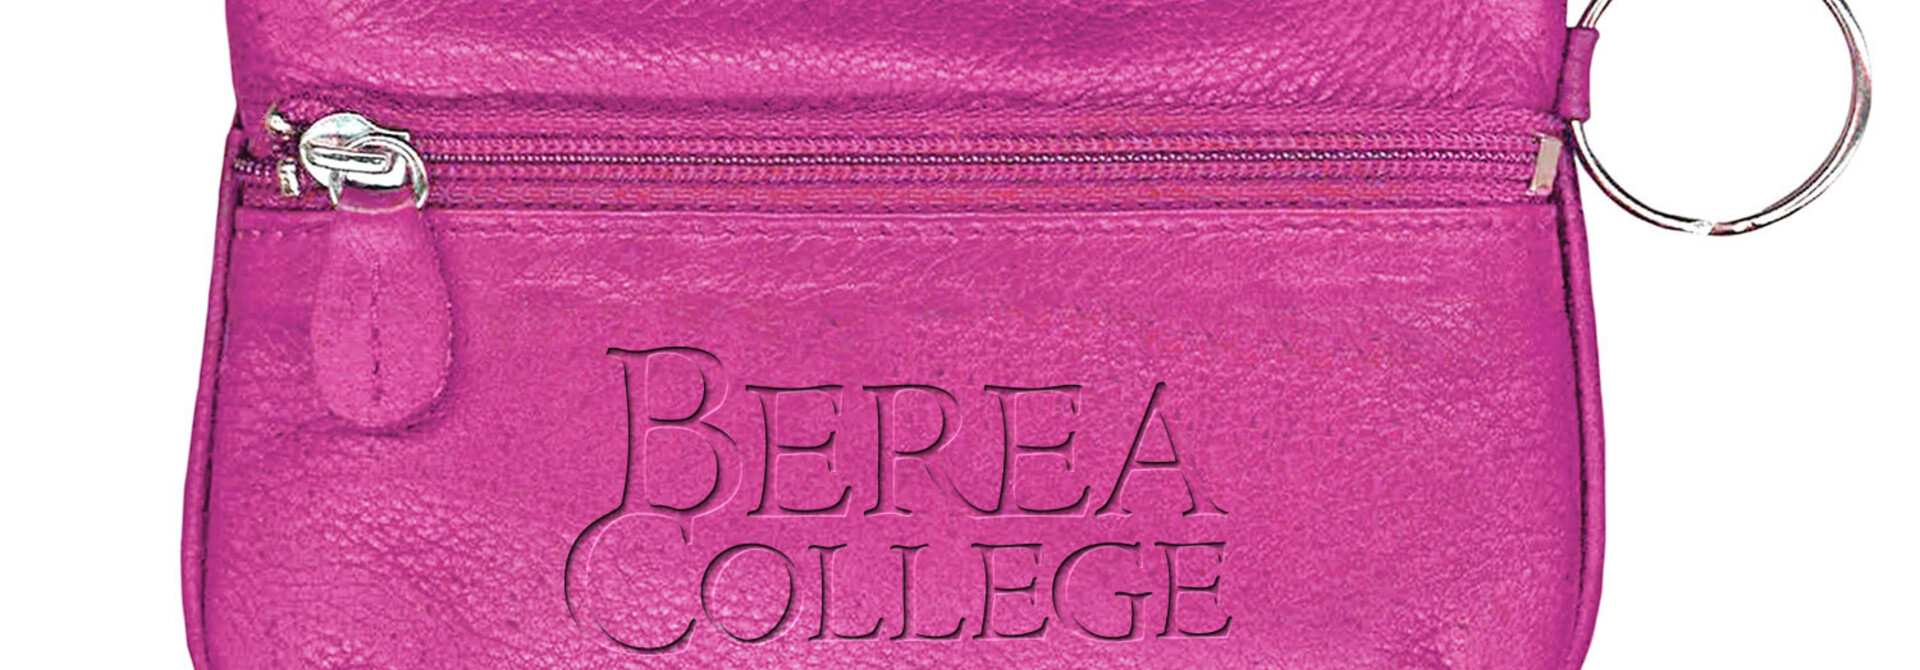 Berea College Coin Wallet